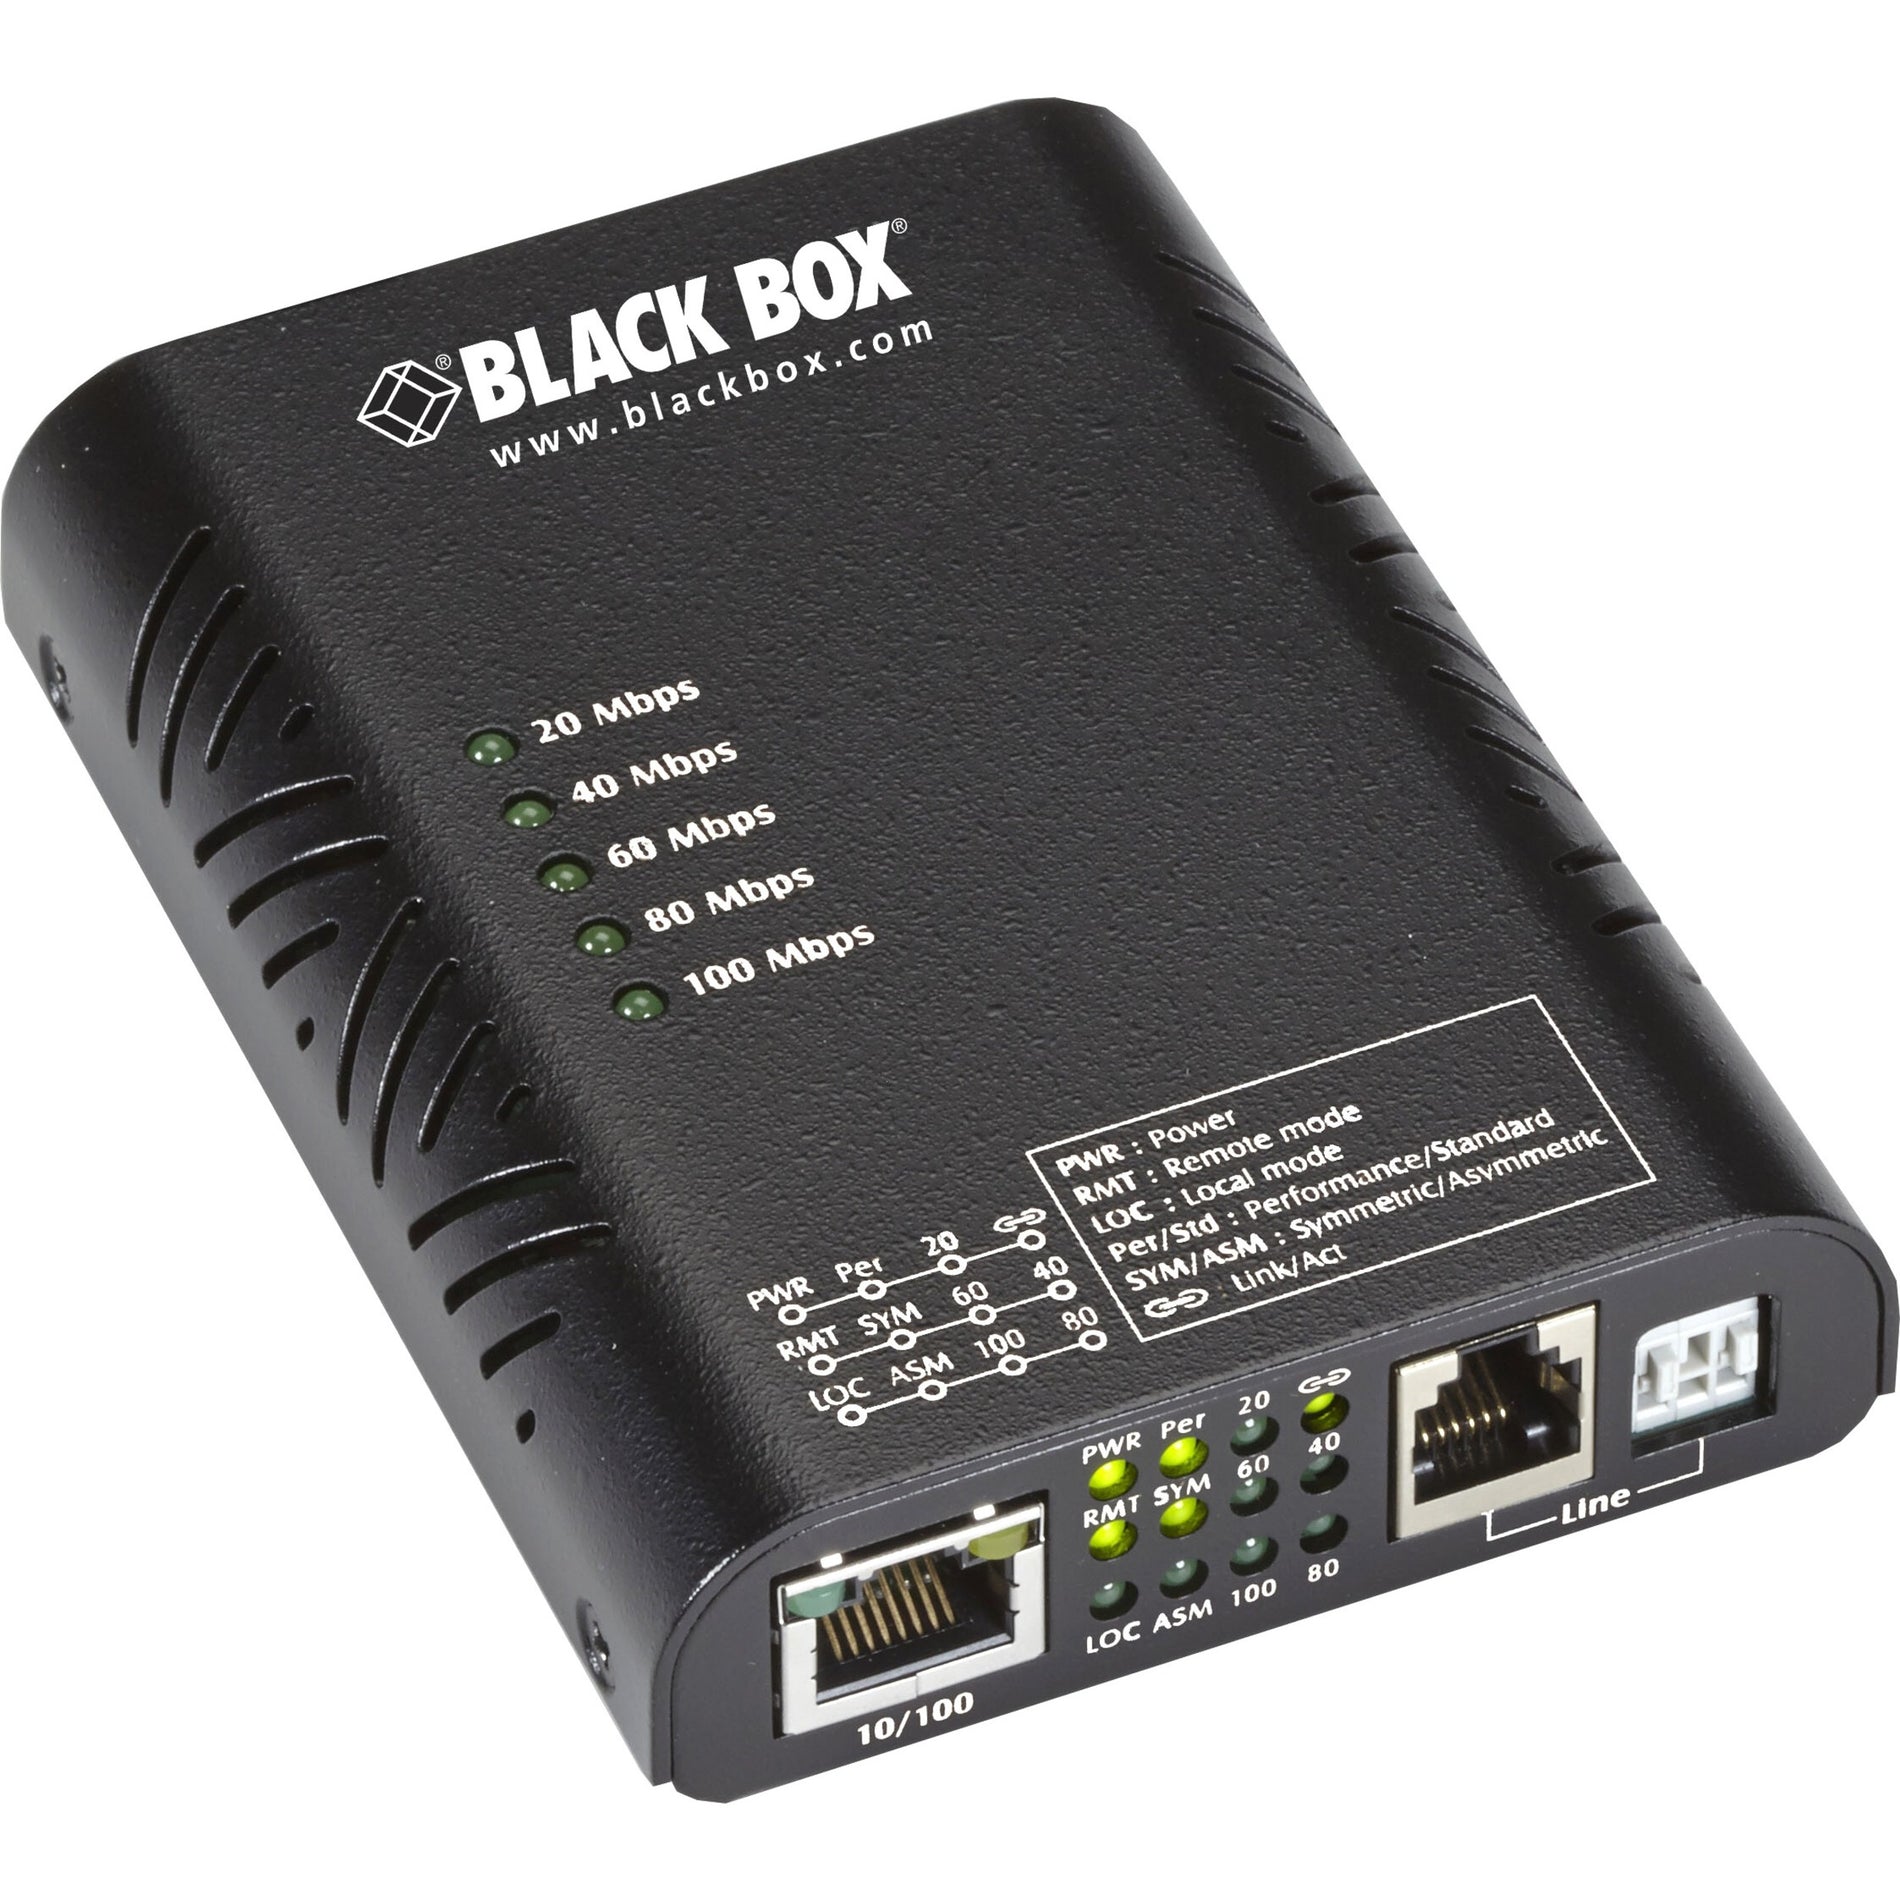 Black Box LB320A Industrial Ethernet Extender - Extend Ethernet up to 1.6 Miles, 10/100 Mbps